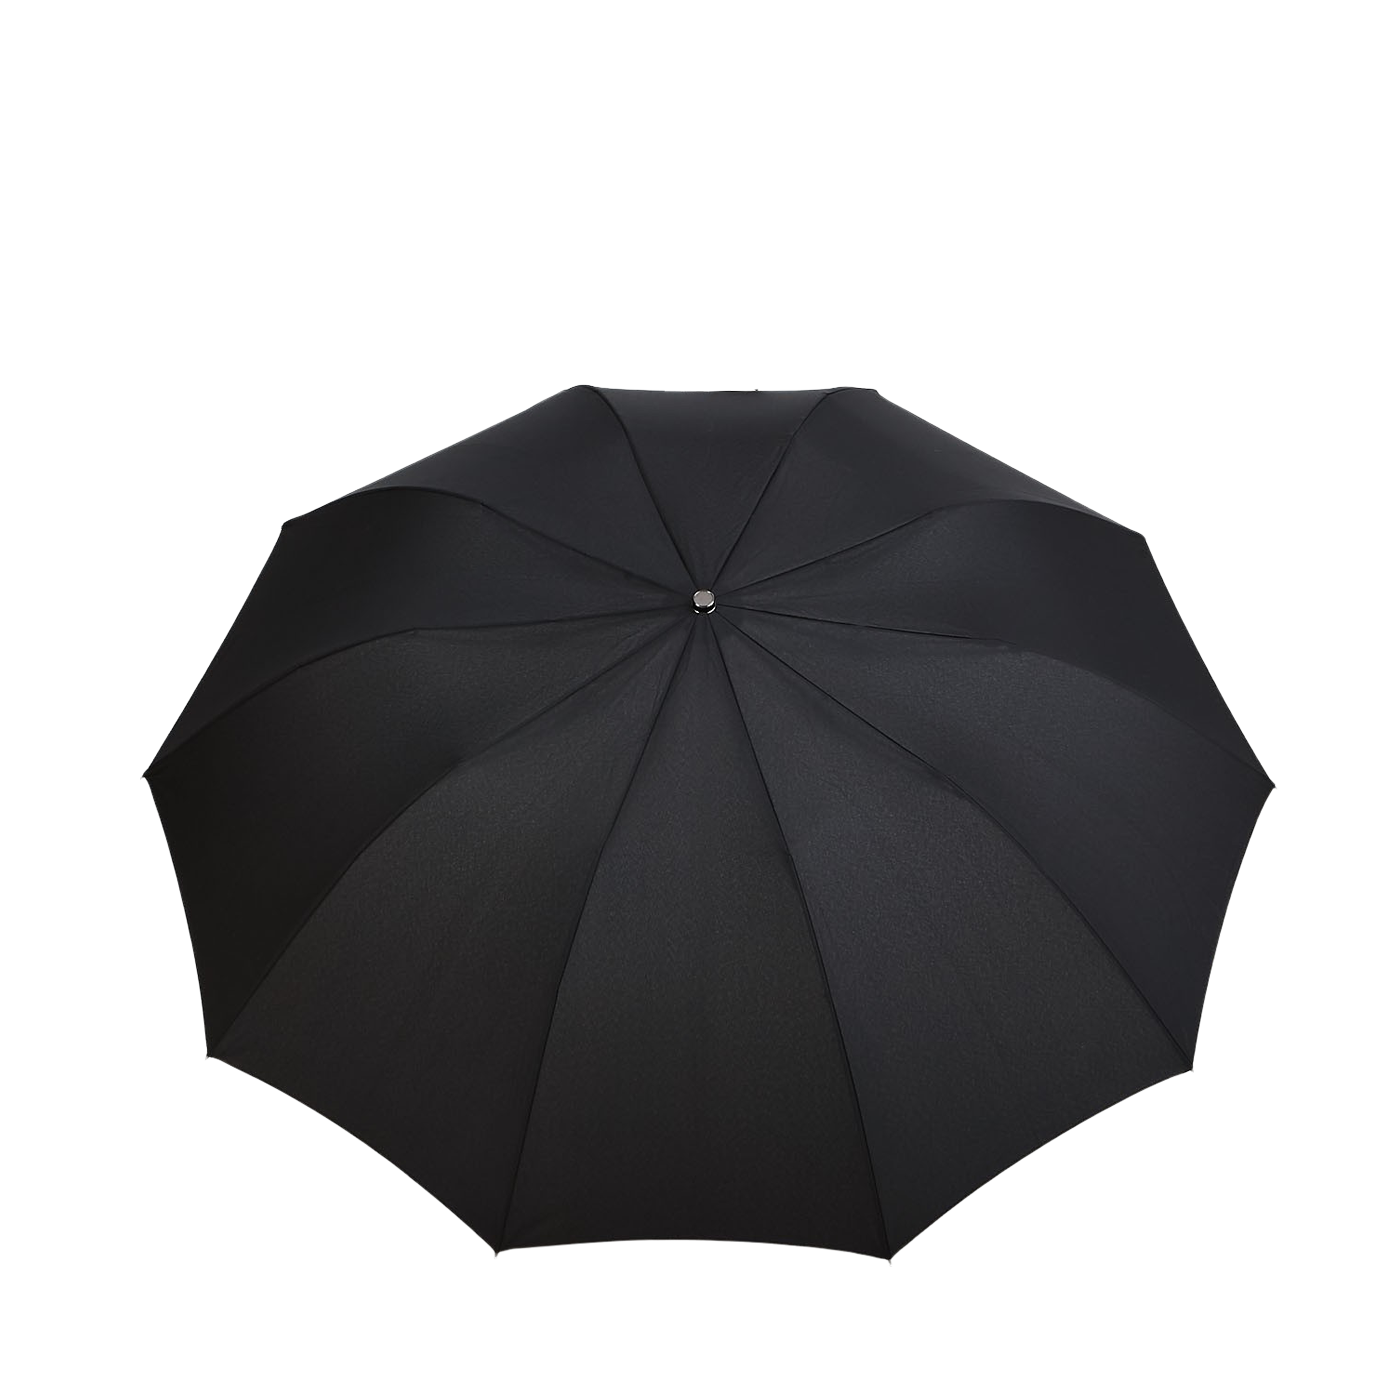 Fox Umbrellas Black Telescopic Whangee Handle Umbrella Top1.